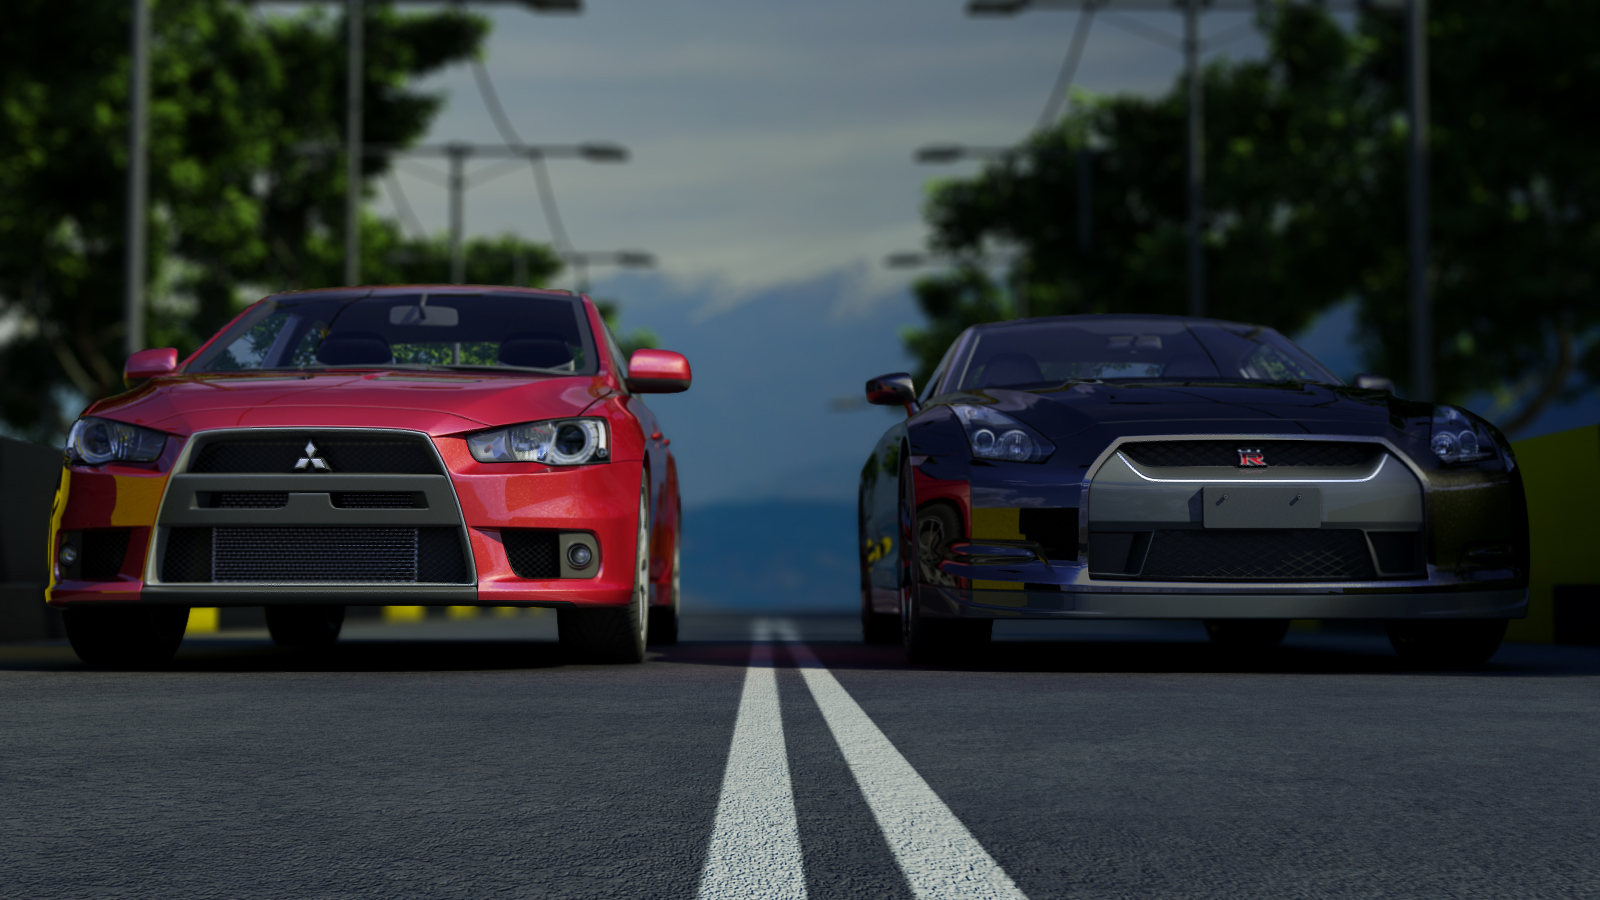 Nissan skyline vs mitsubishi lancer evolution #2